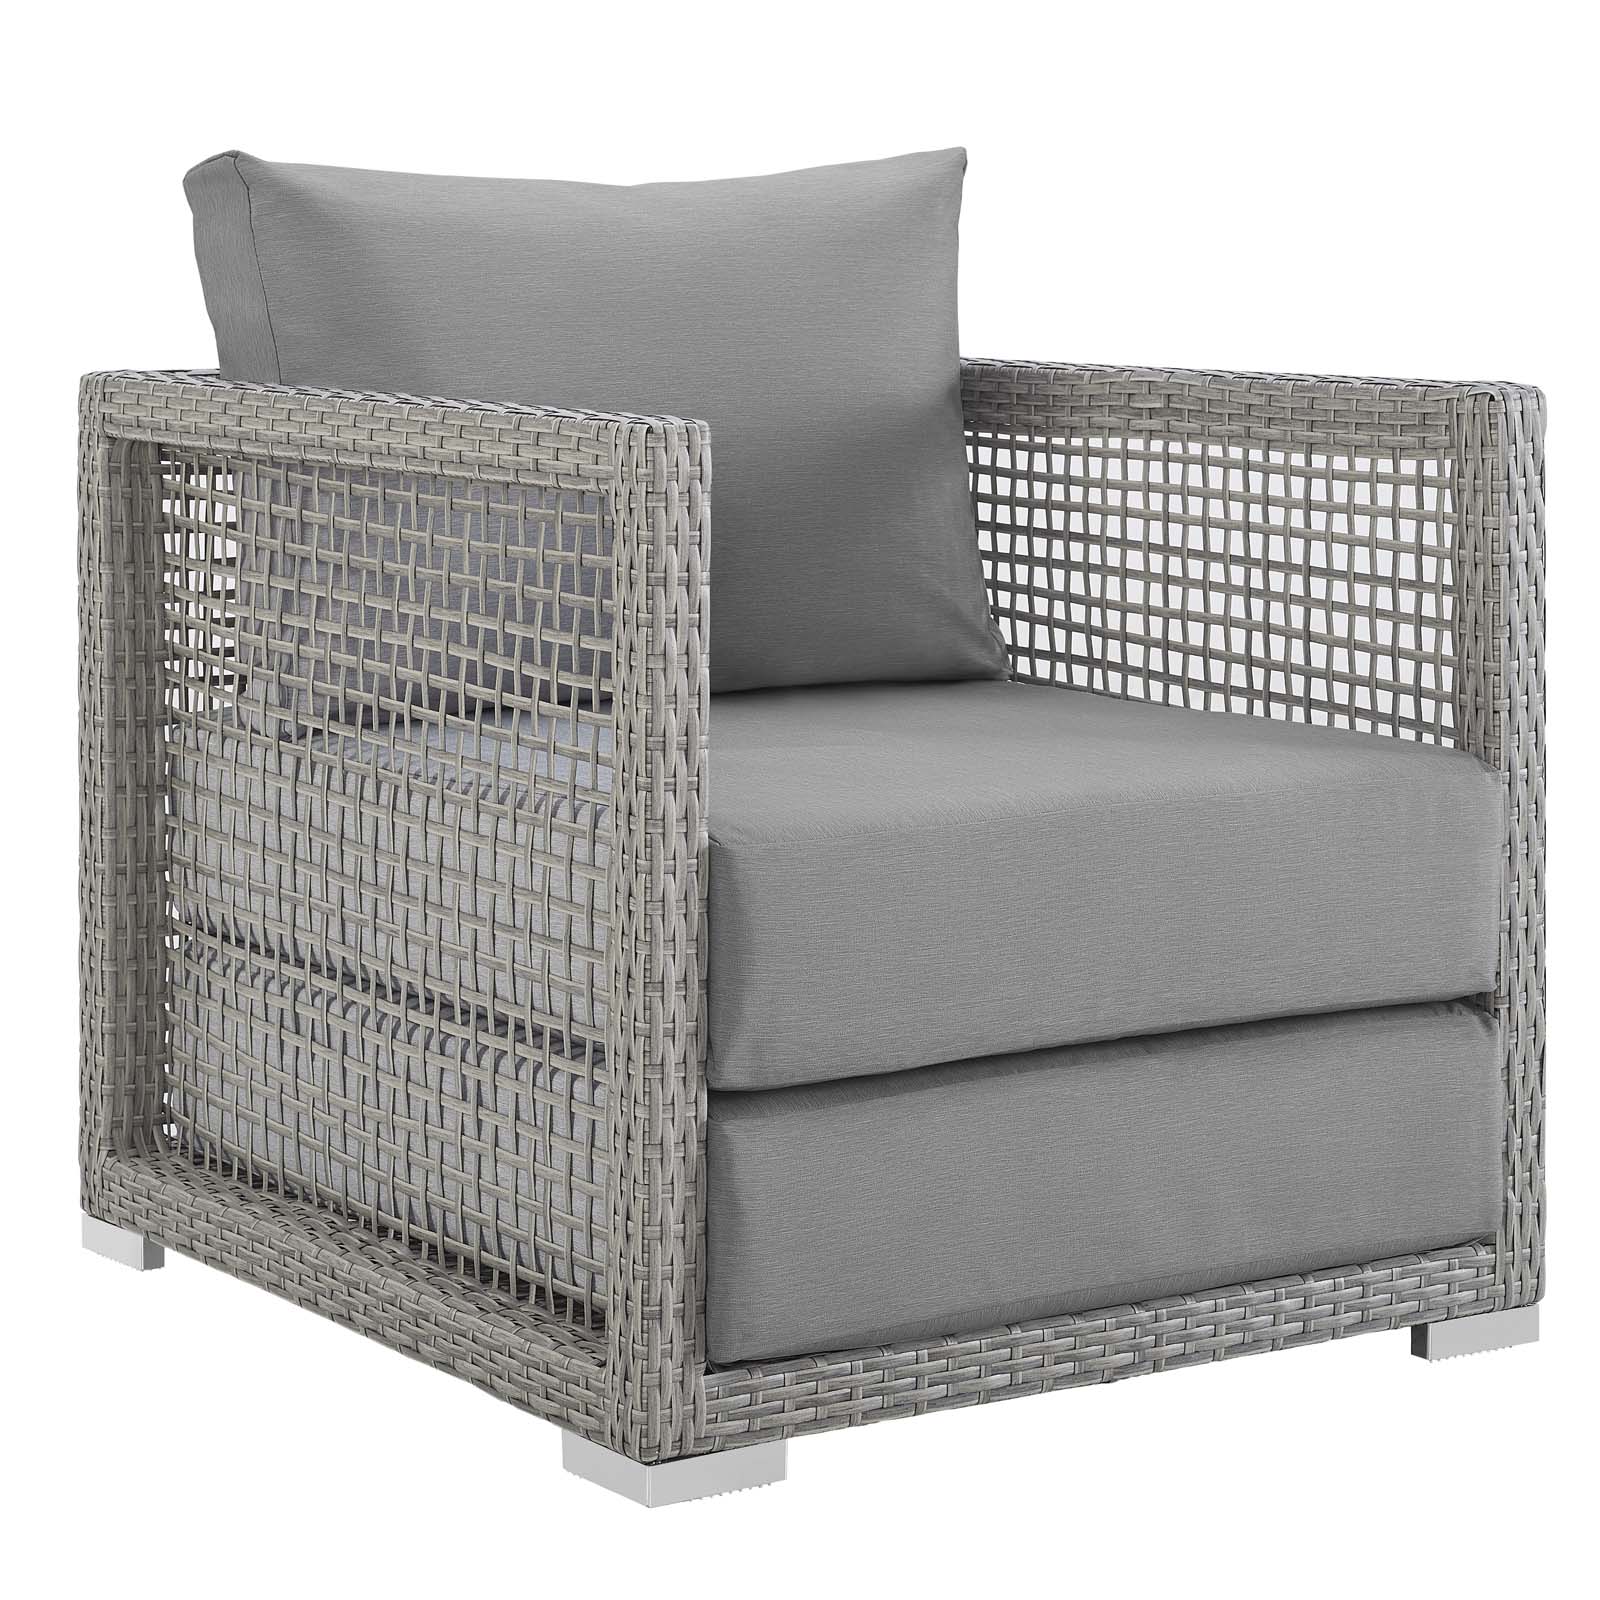 Modern Contemporary Urban Design Outdoor Patio Balcony Garden Furniture Lounge Chair, Sofa and Table Set, Rattan Wicker, Grey Gray - image 3 of 8